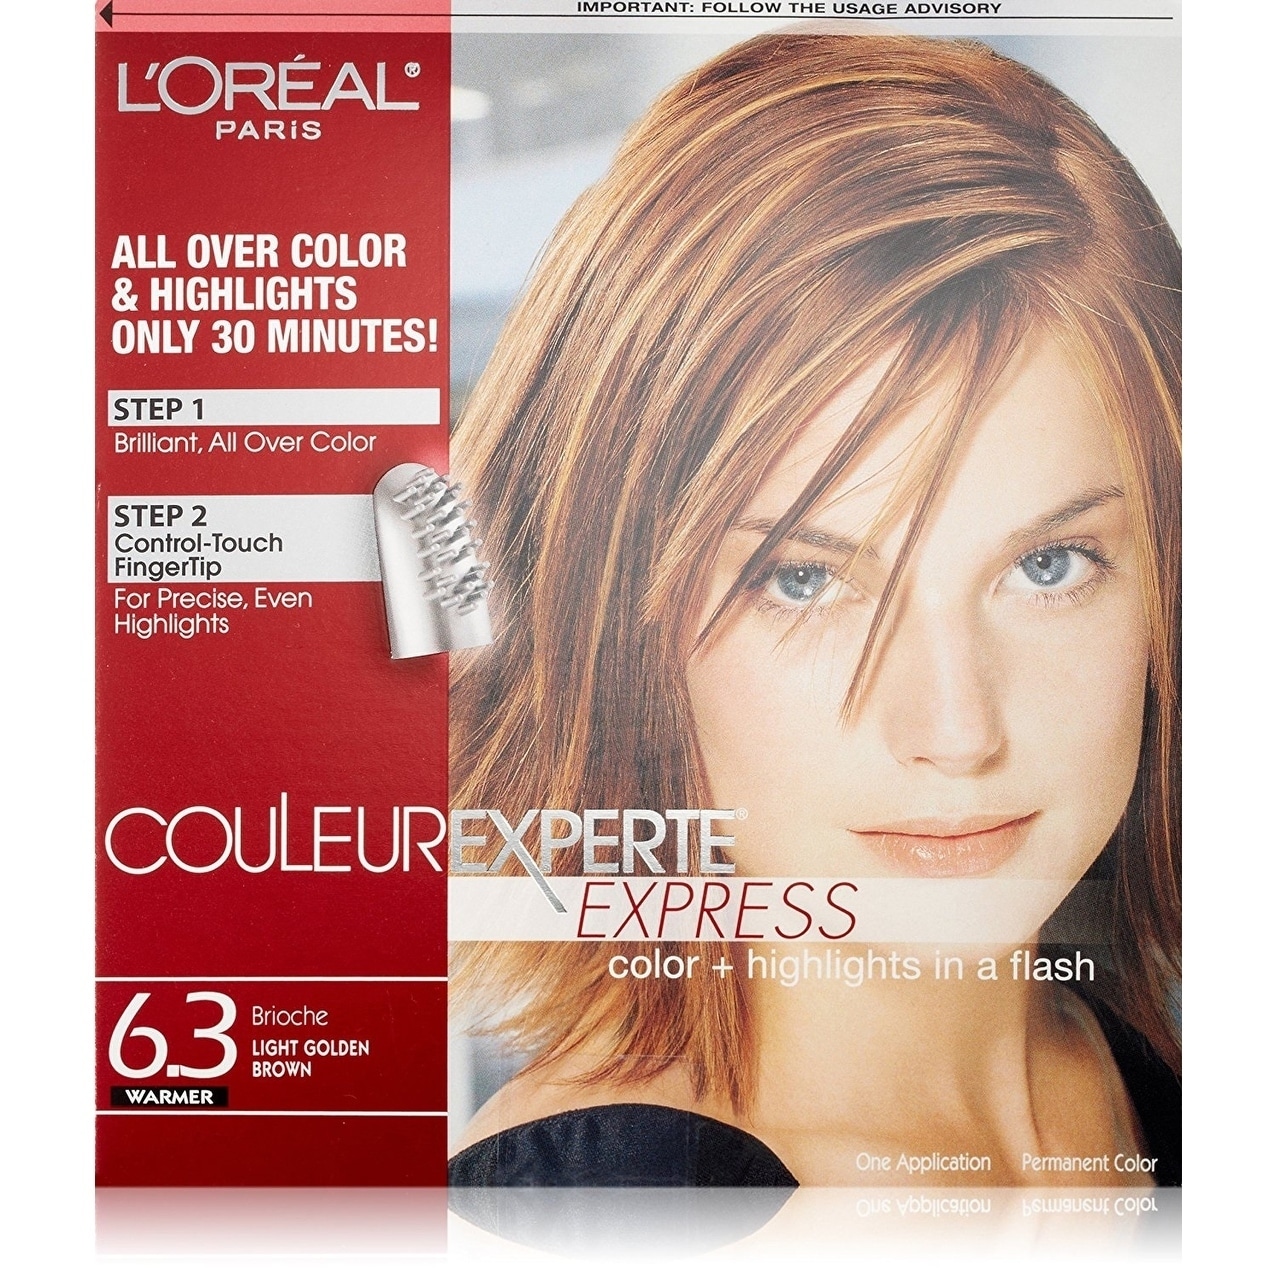 L Oreal Paris Couleur Experte Express Hair Color Highlights Permanent 6 3 Warmer Brioche Light Golden Brown